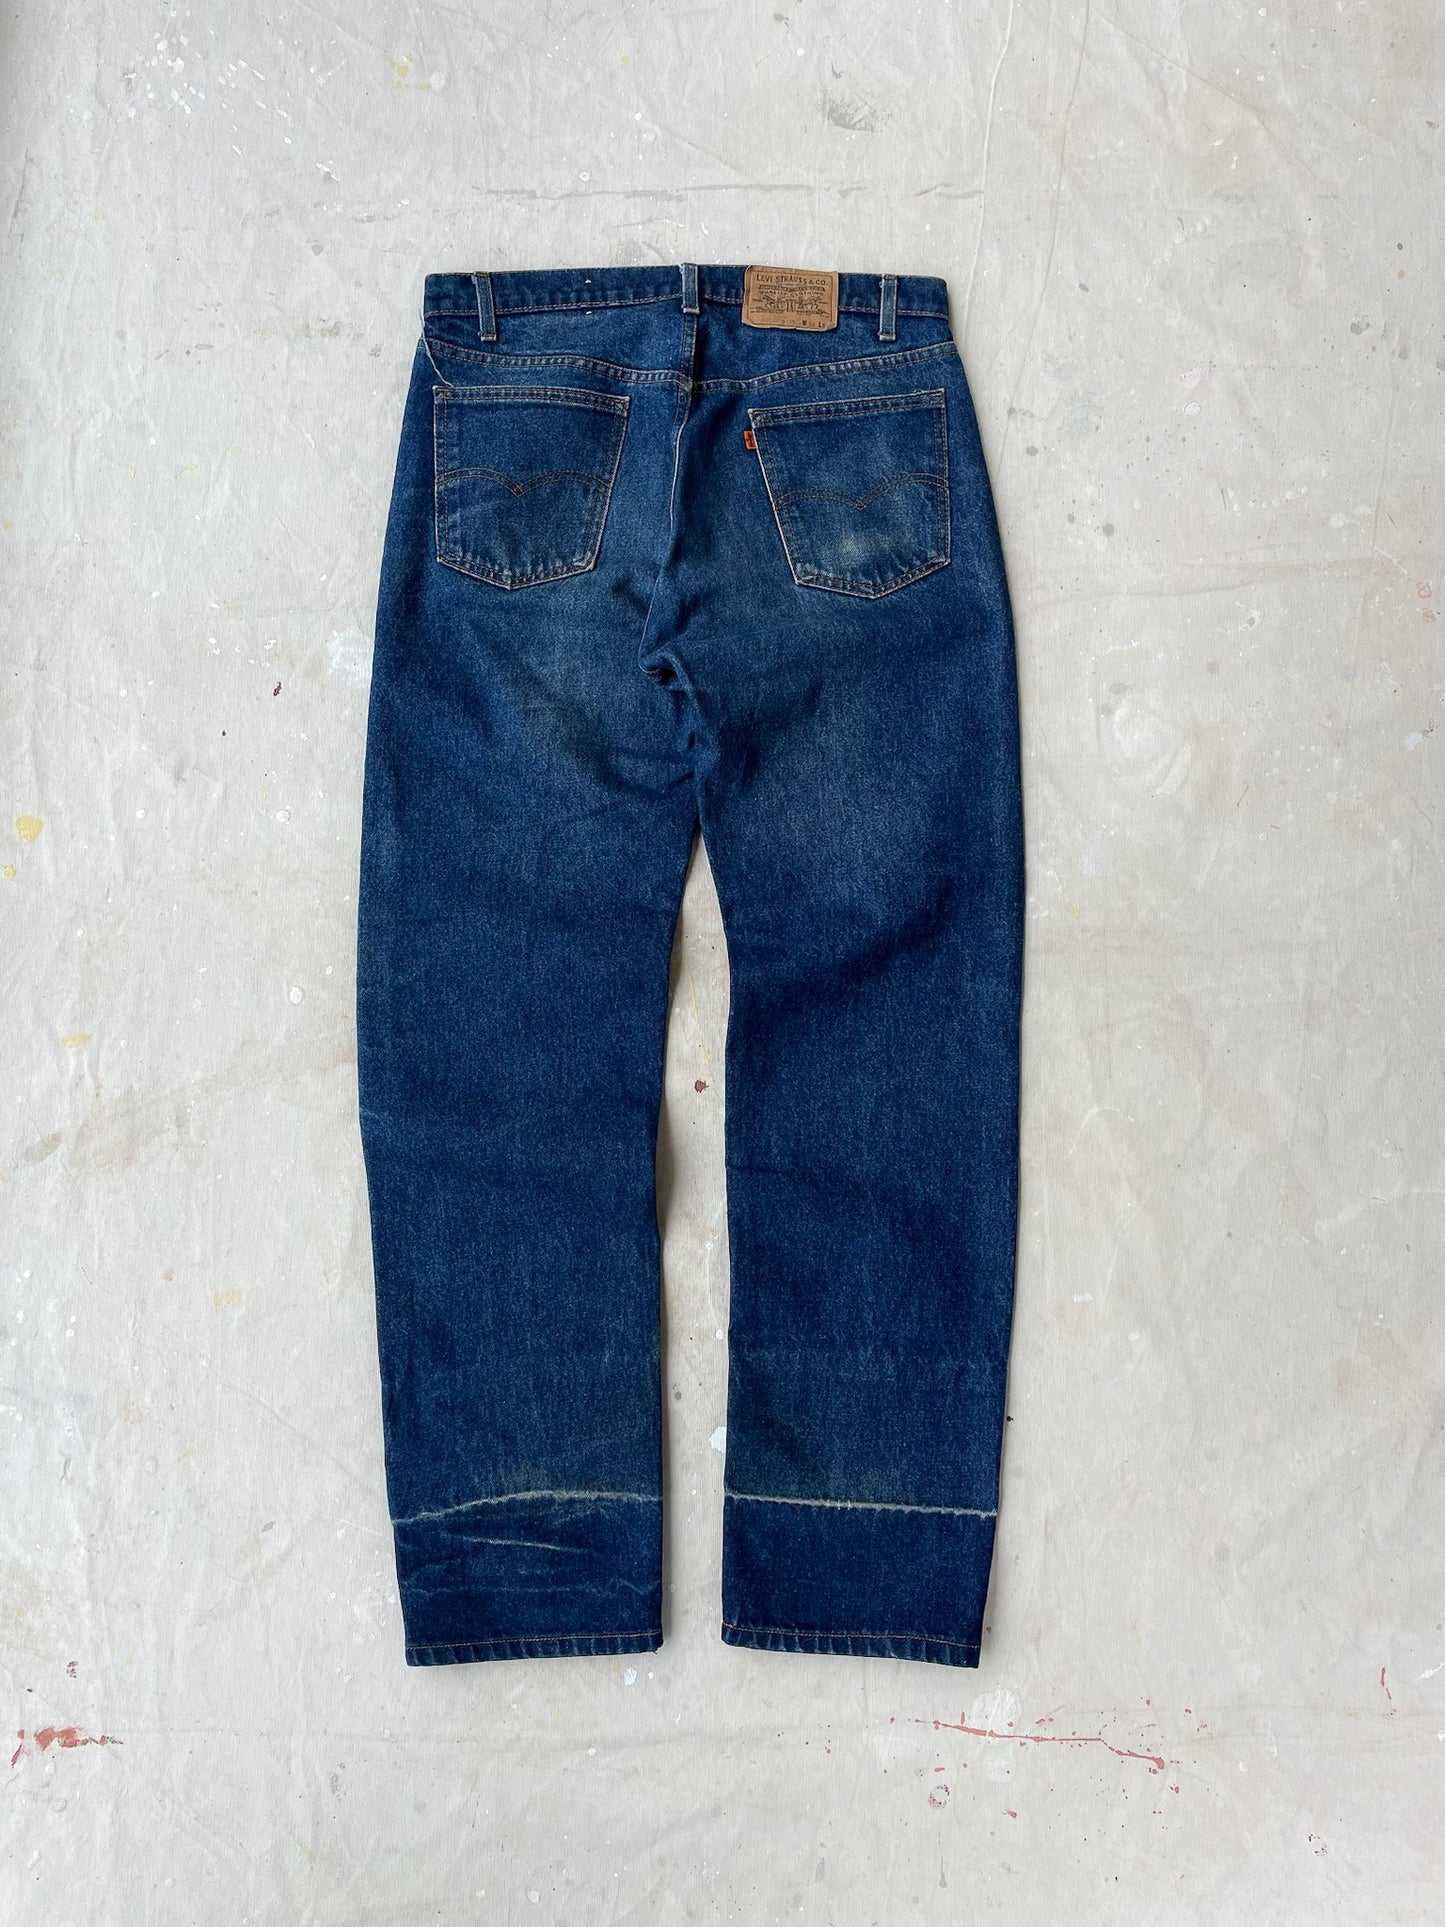 Levi's 505 Orange Tab Jeans—[34X34]